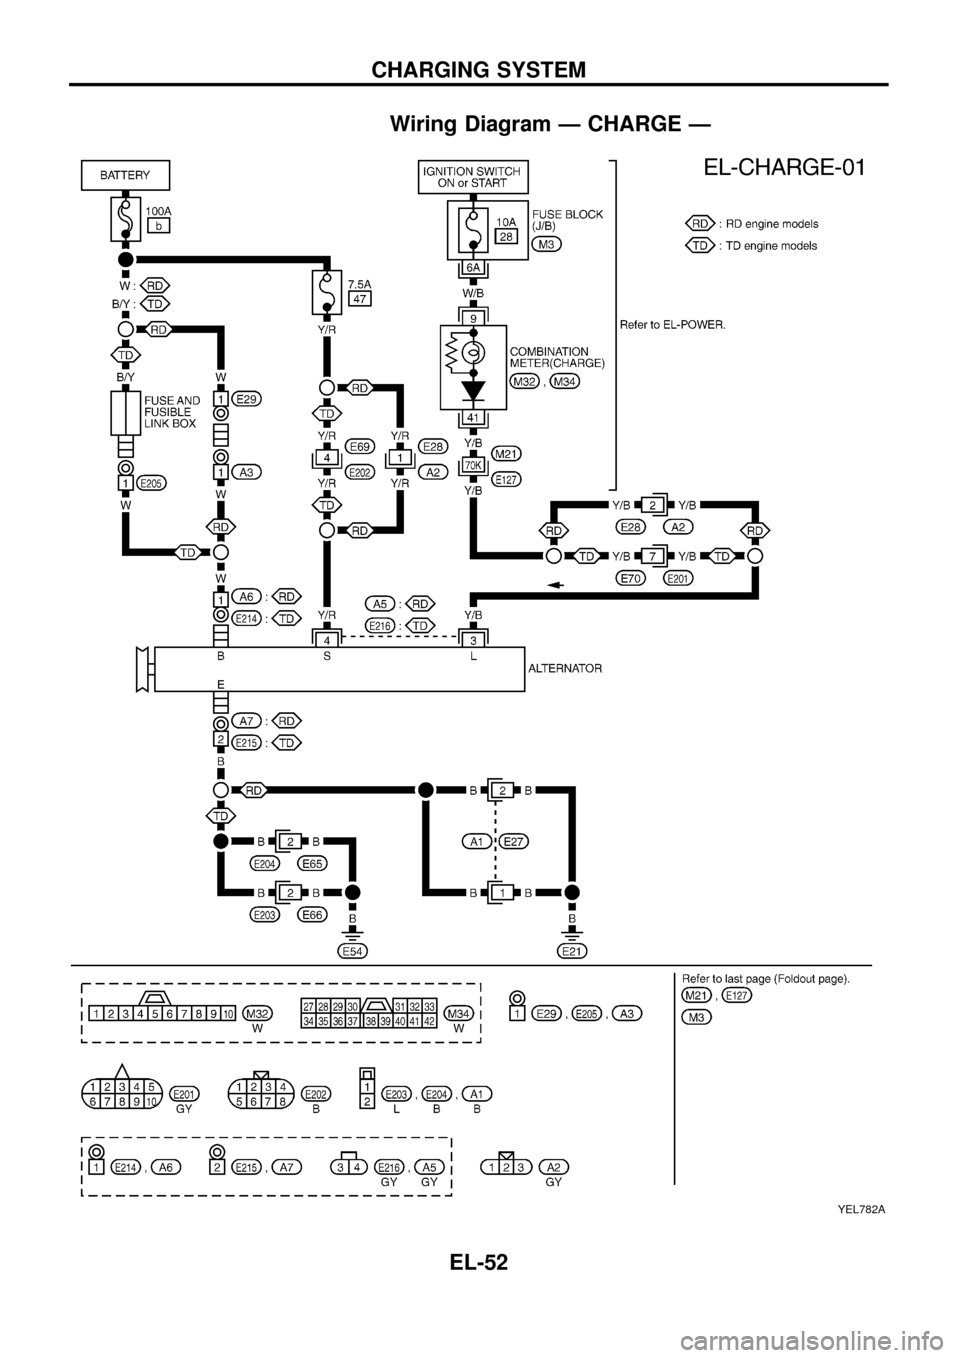 NISSAN PATROL 1998 Y61 / 5.G Electrical System User Guide Wiring Diagram Ð CHARGE Ð
YEL782A
CHARGING SYSTEM
EL-52 